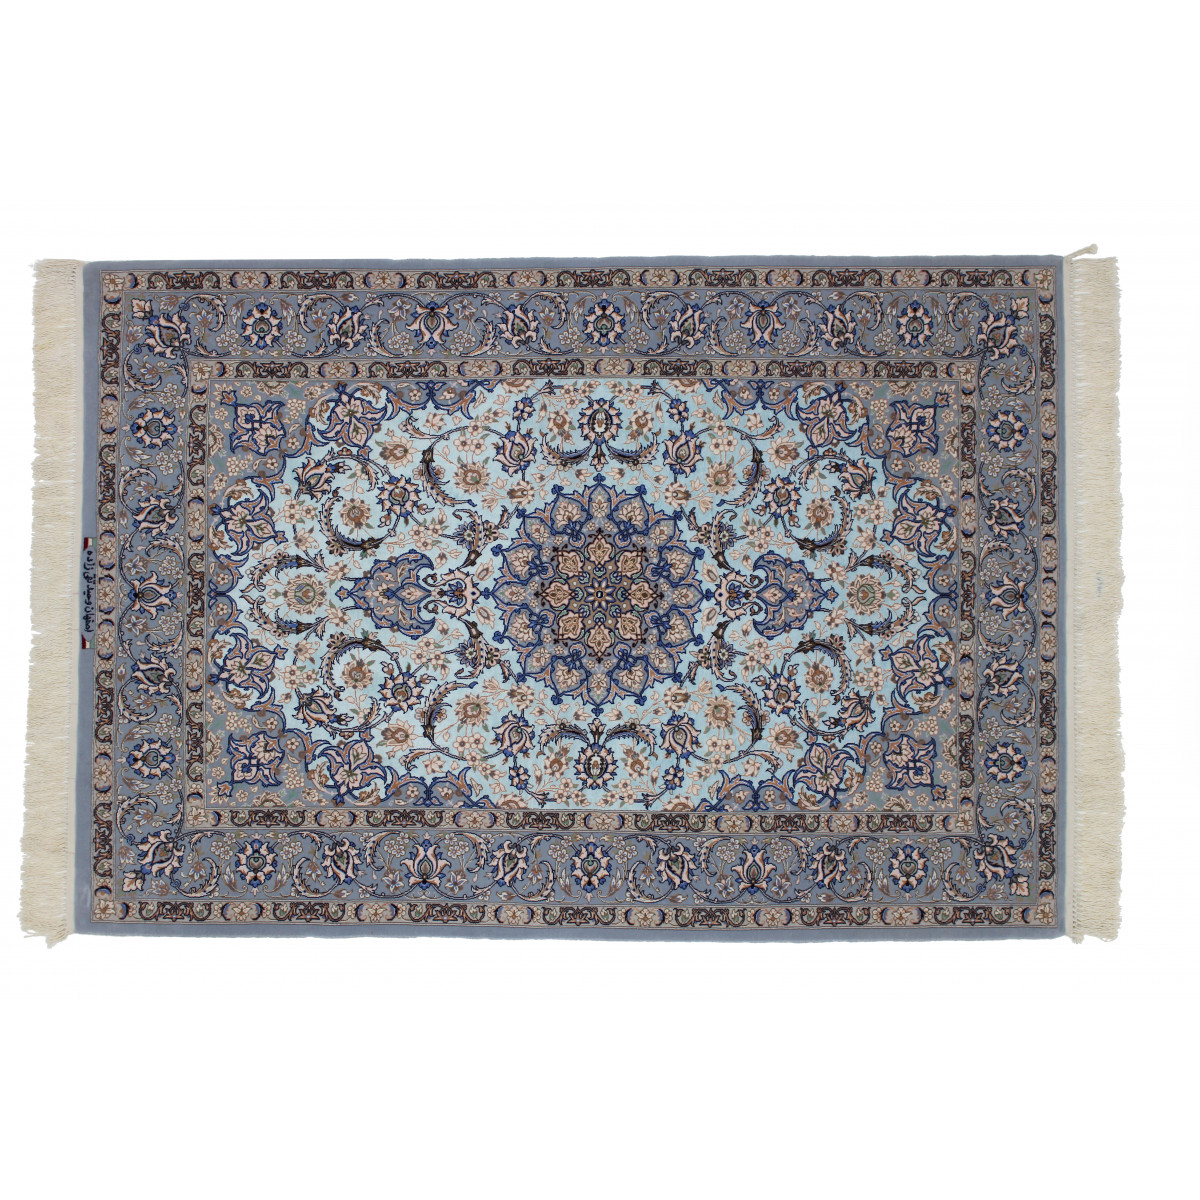 Medalion Design Pattern | Wool Isfahan Rug  | RI6012